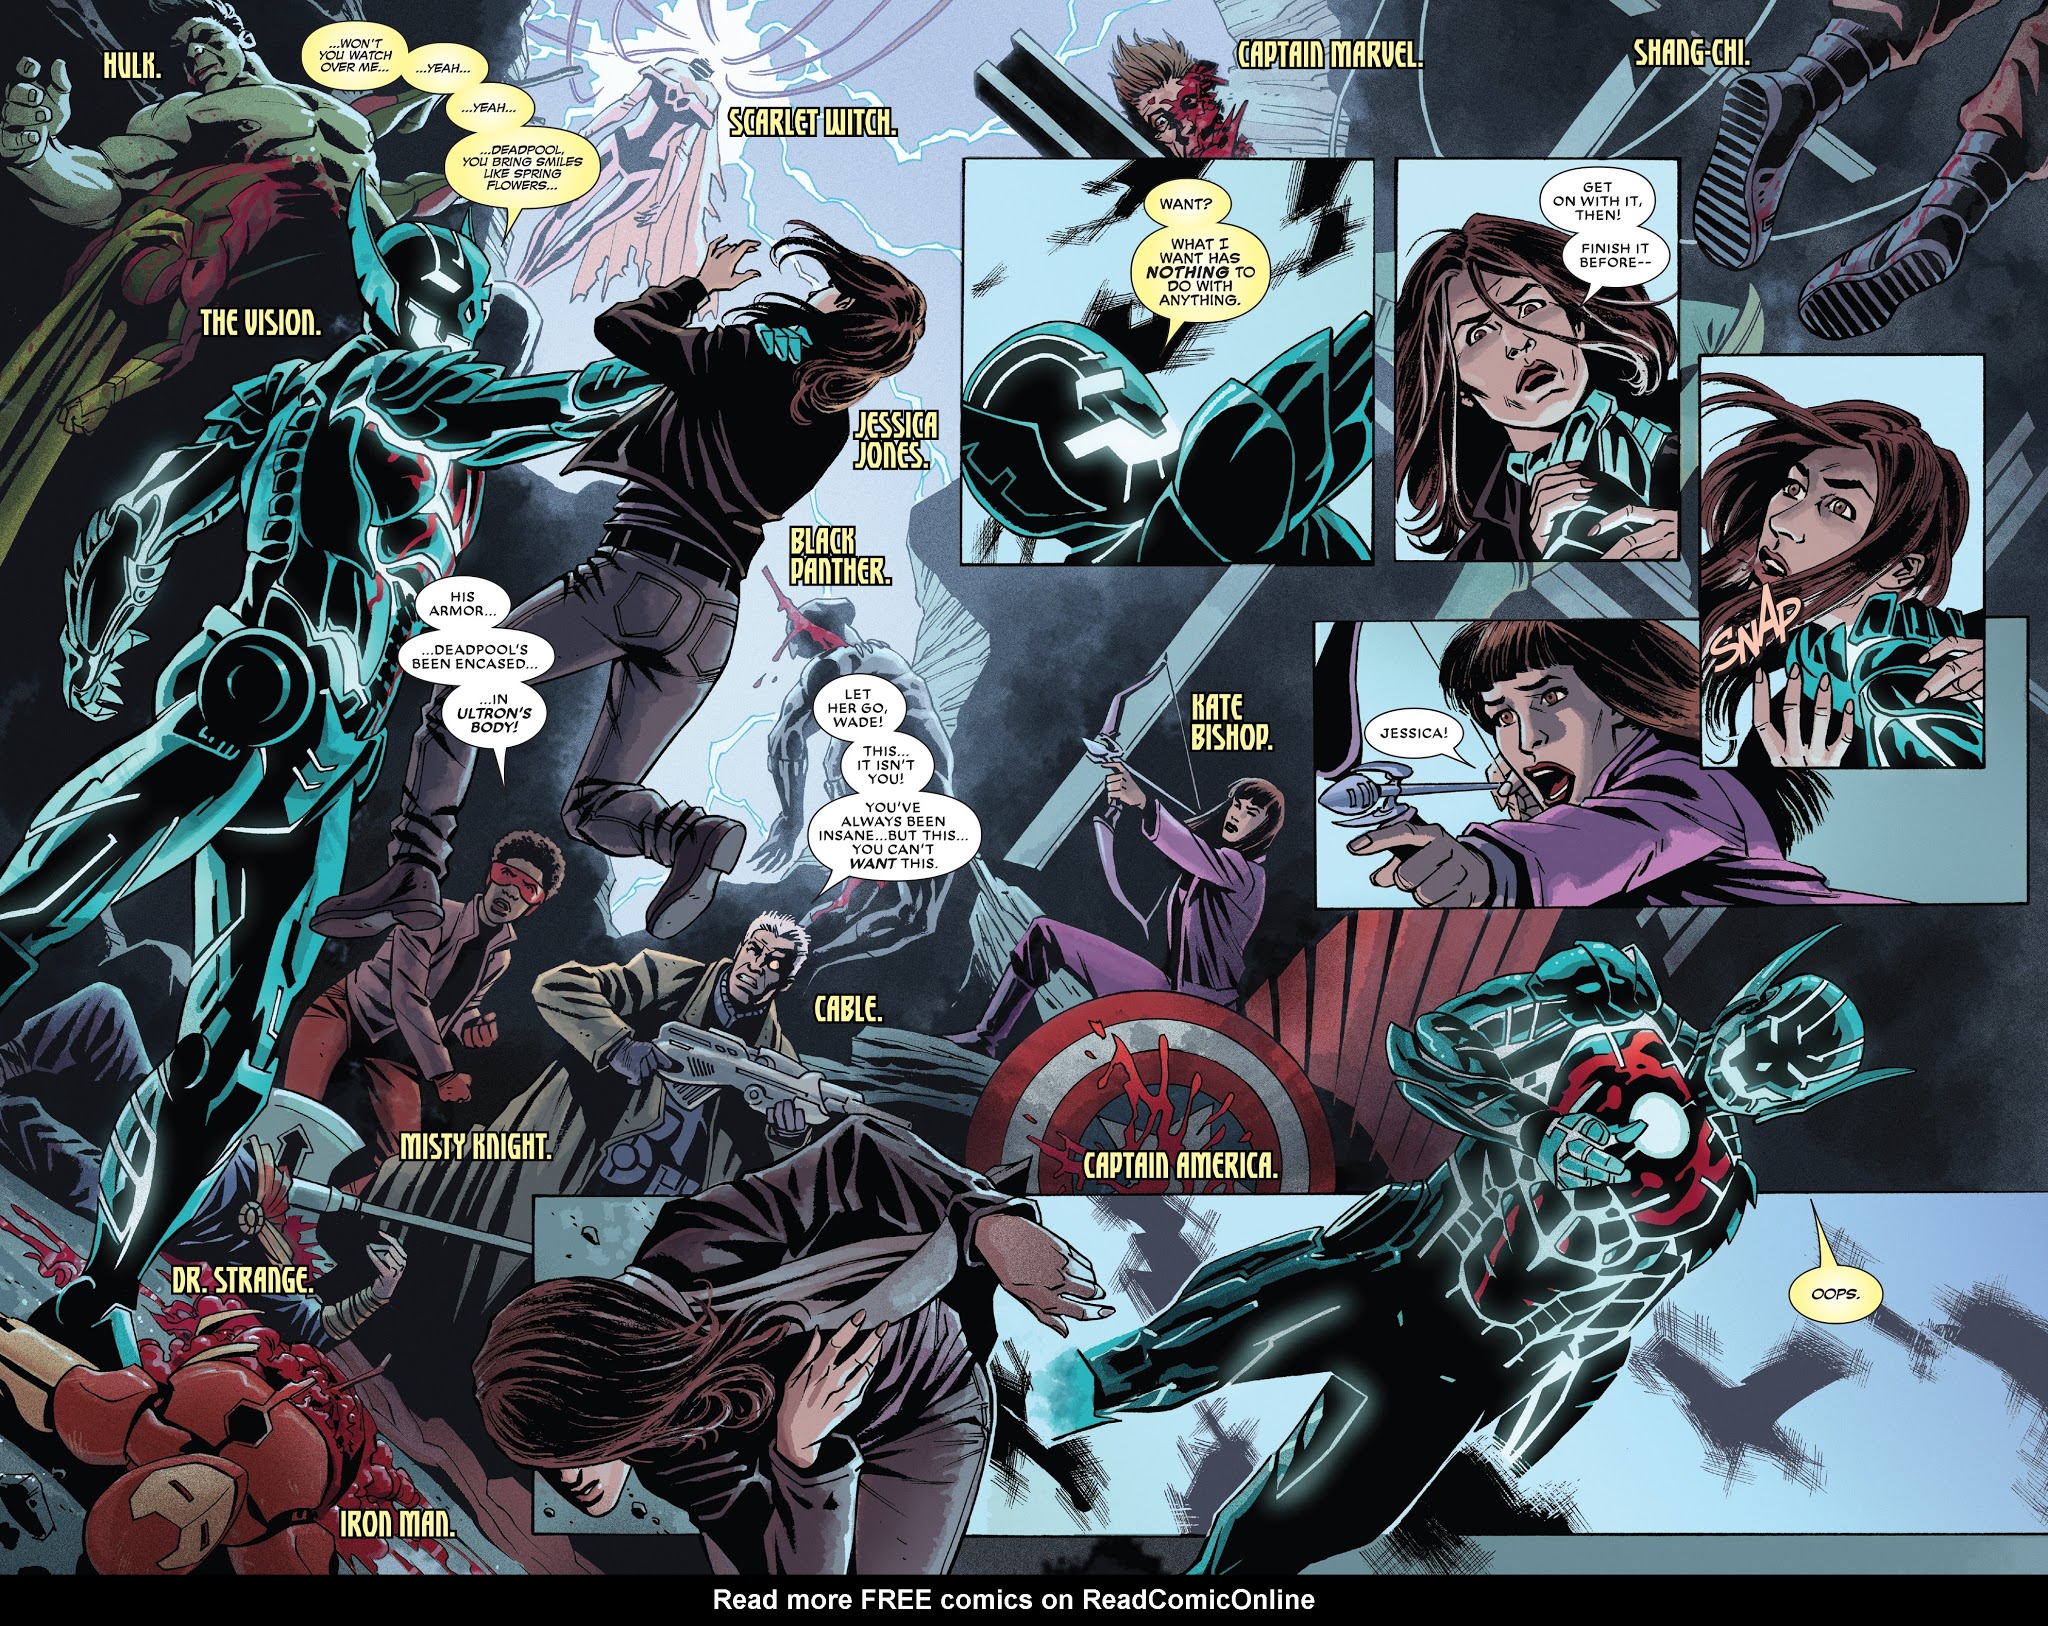 Deadpool Kills The Marvel Universe Again Issue 4 Viewcomic